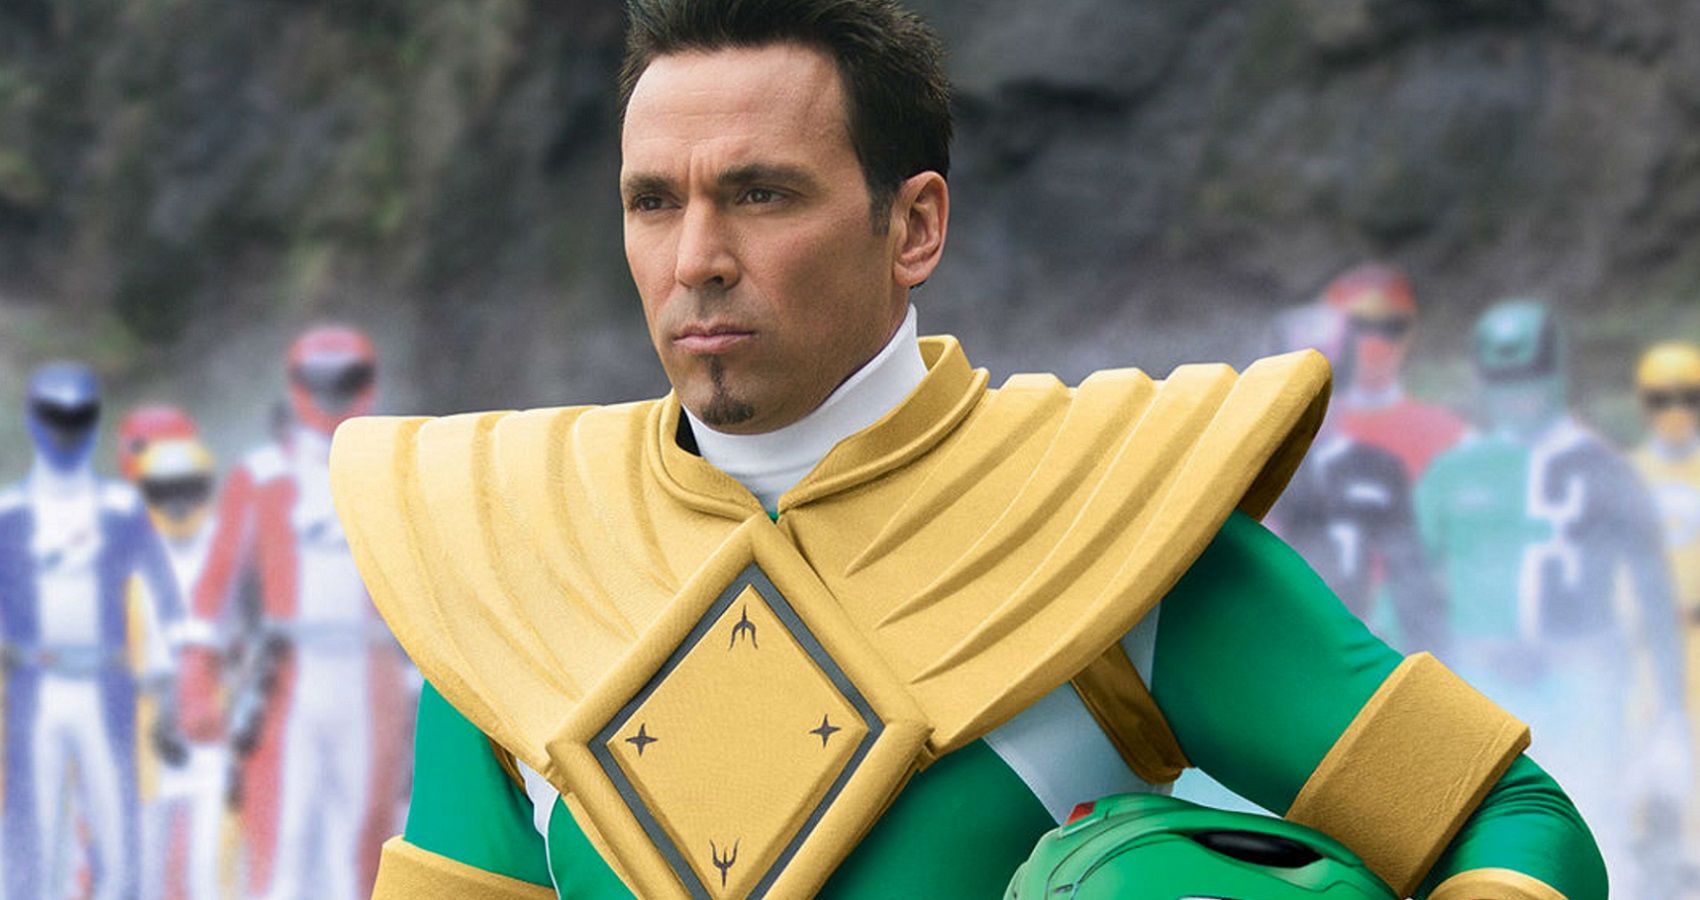 Jason David Frank as the Green Power Ranger